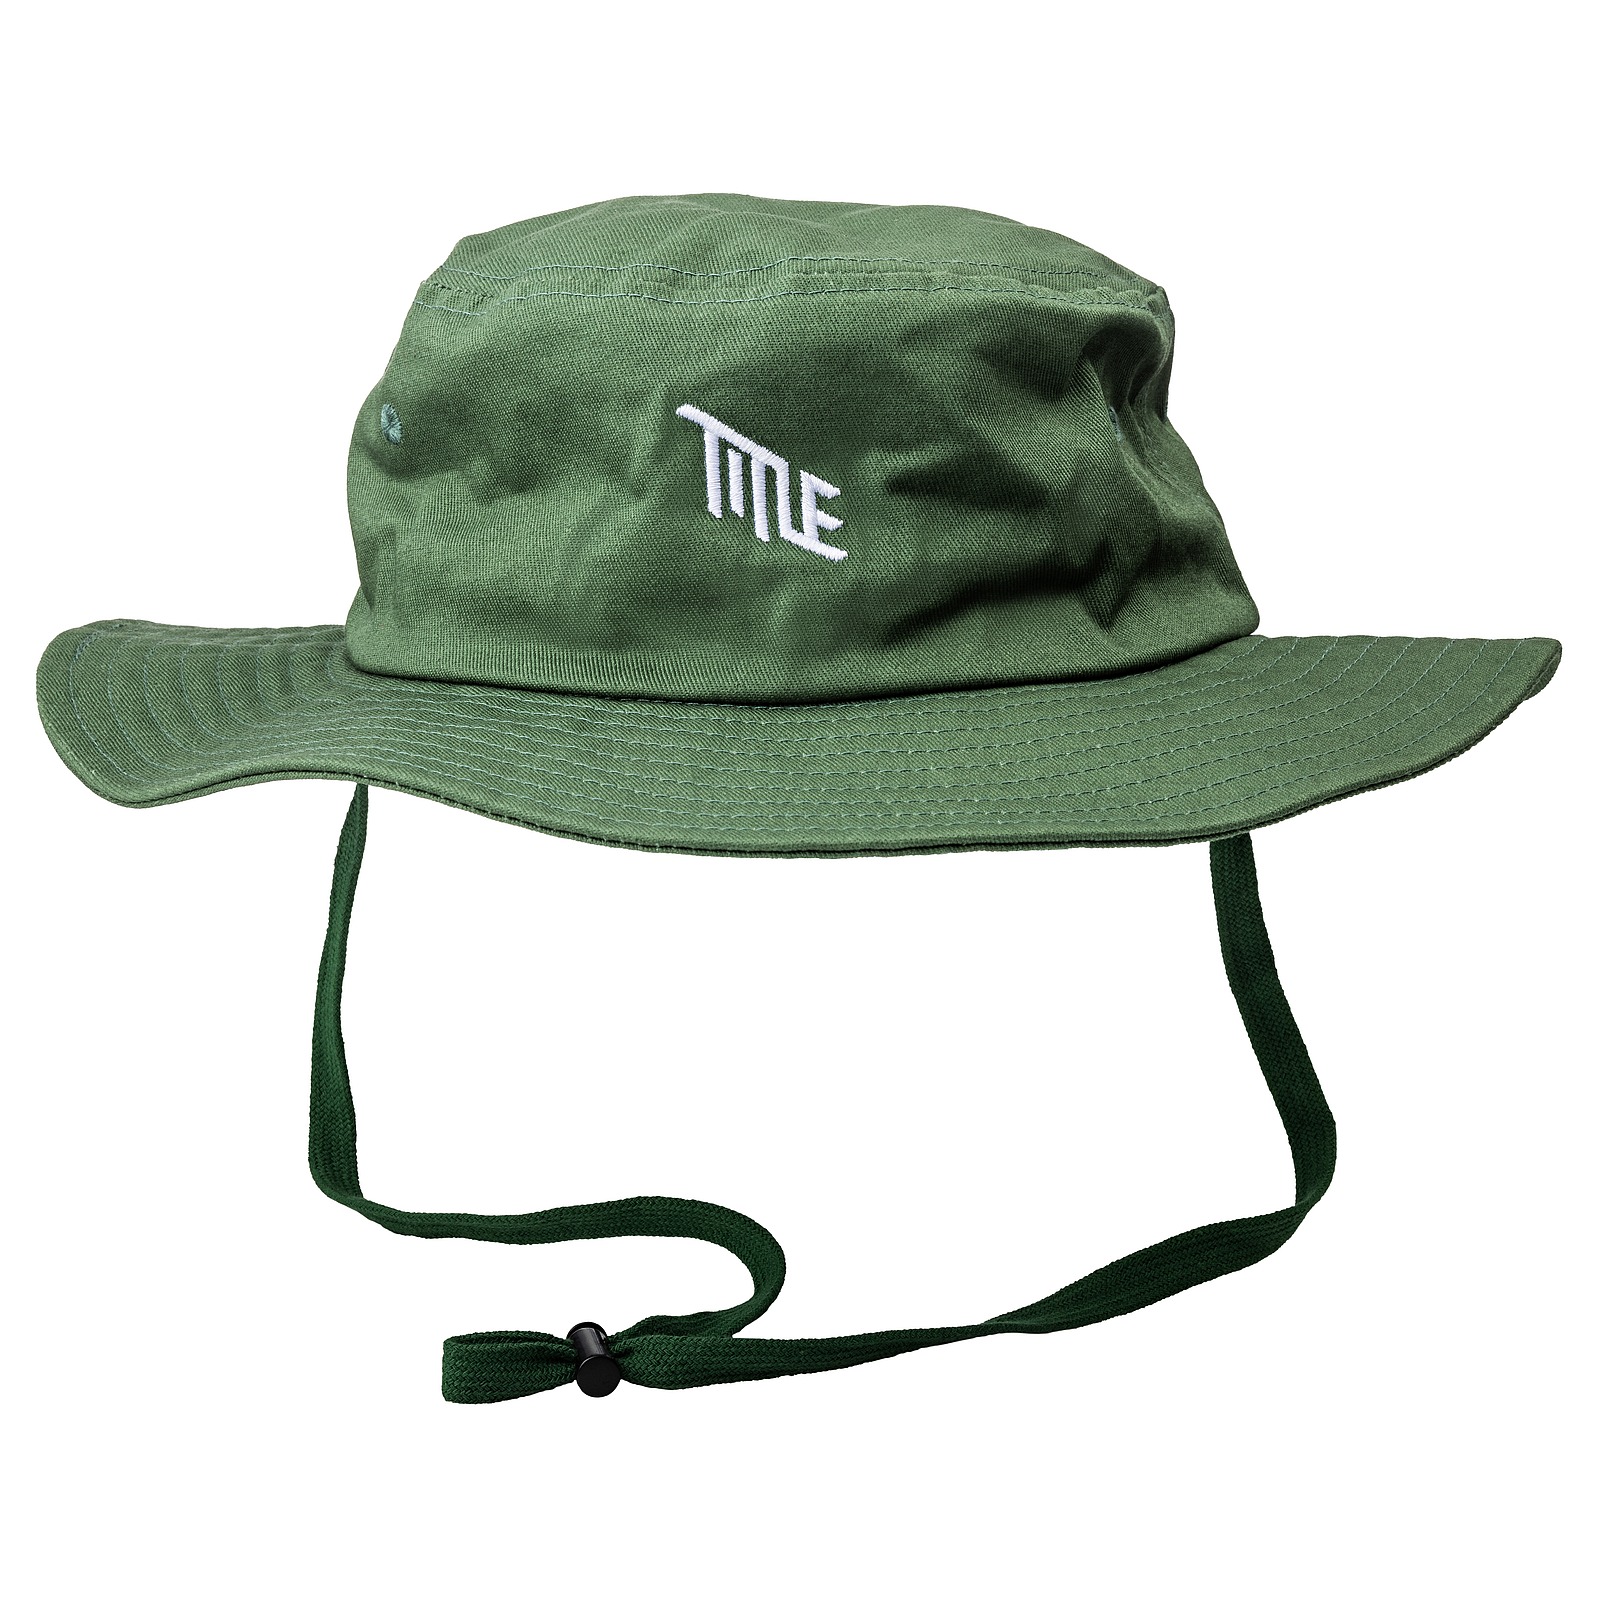 Picture of Title SAFARI Hat - green